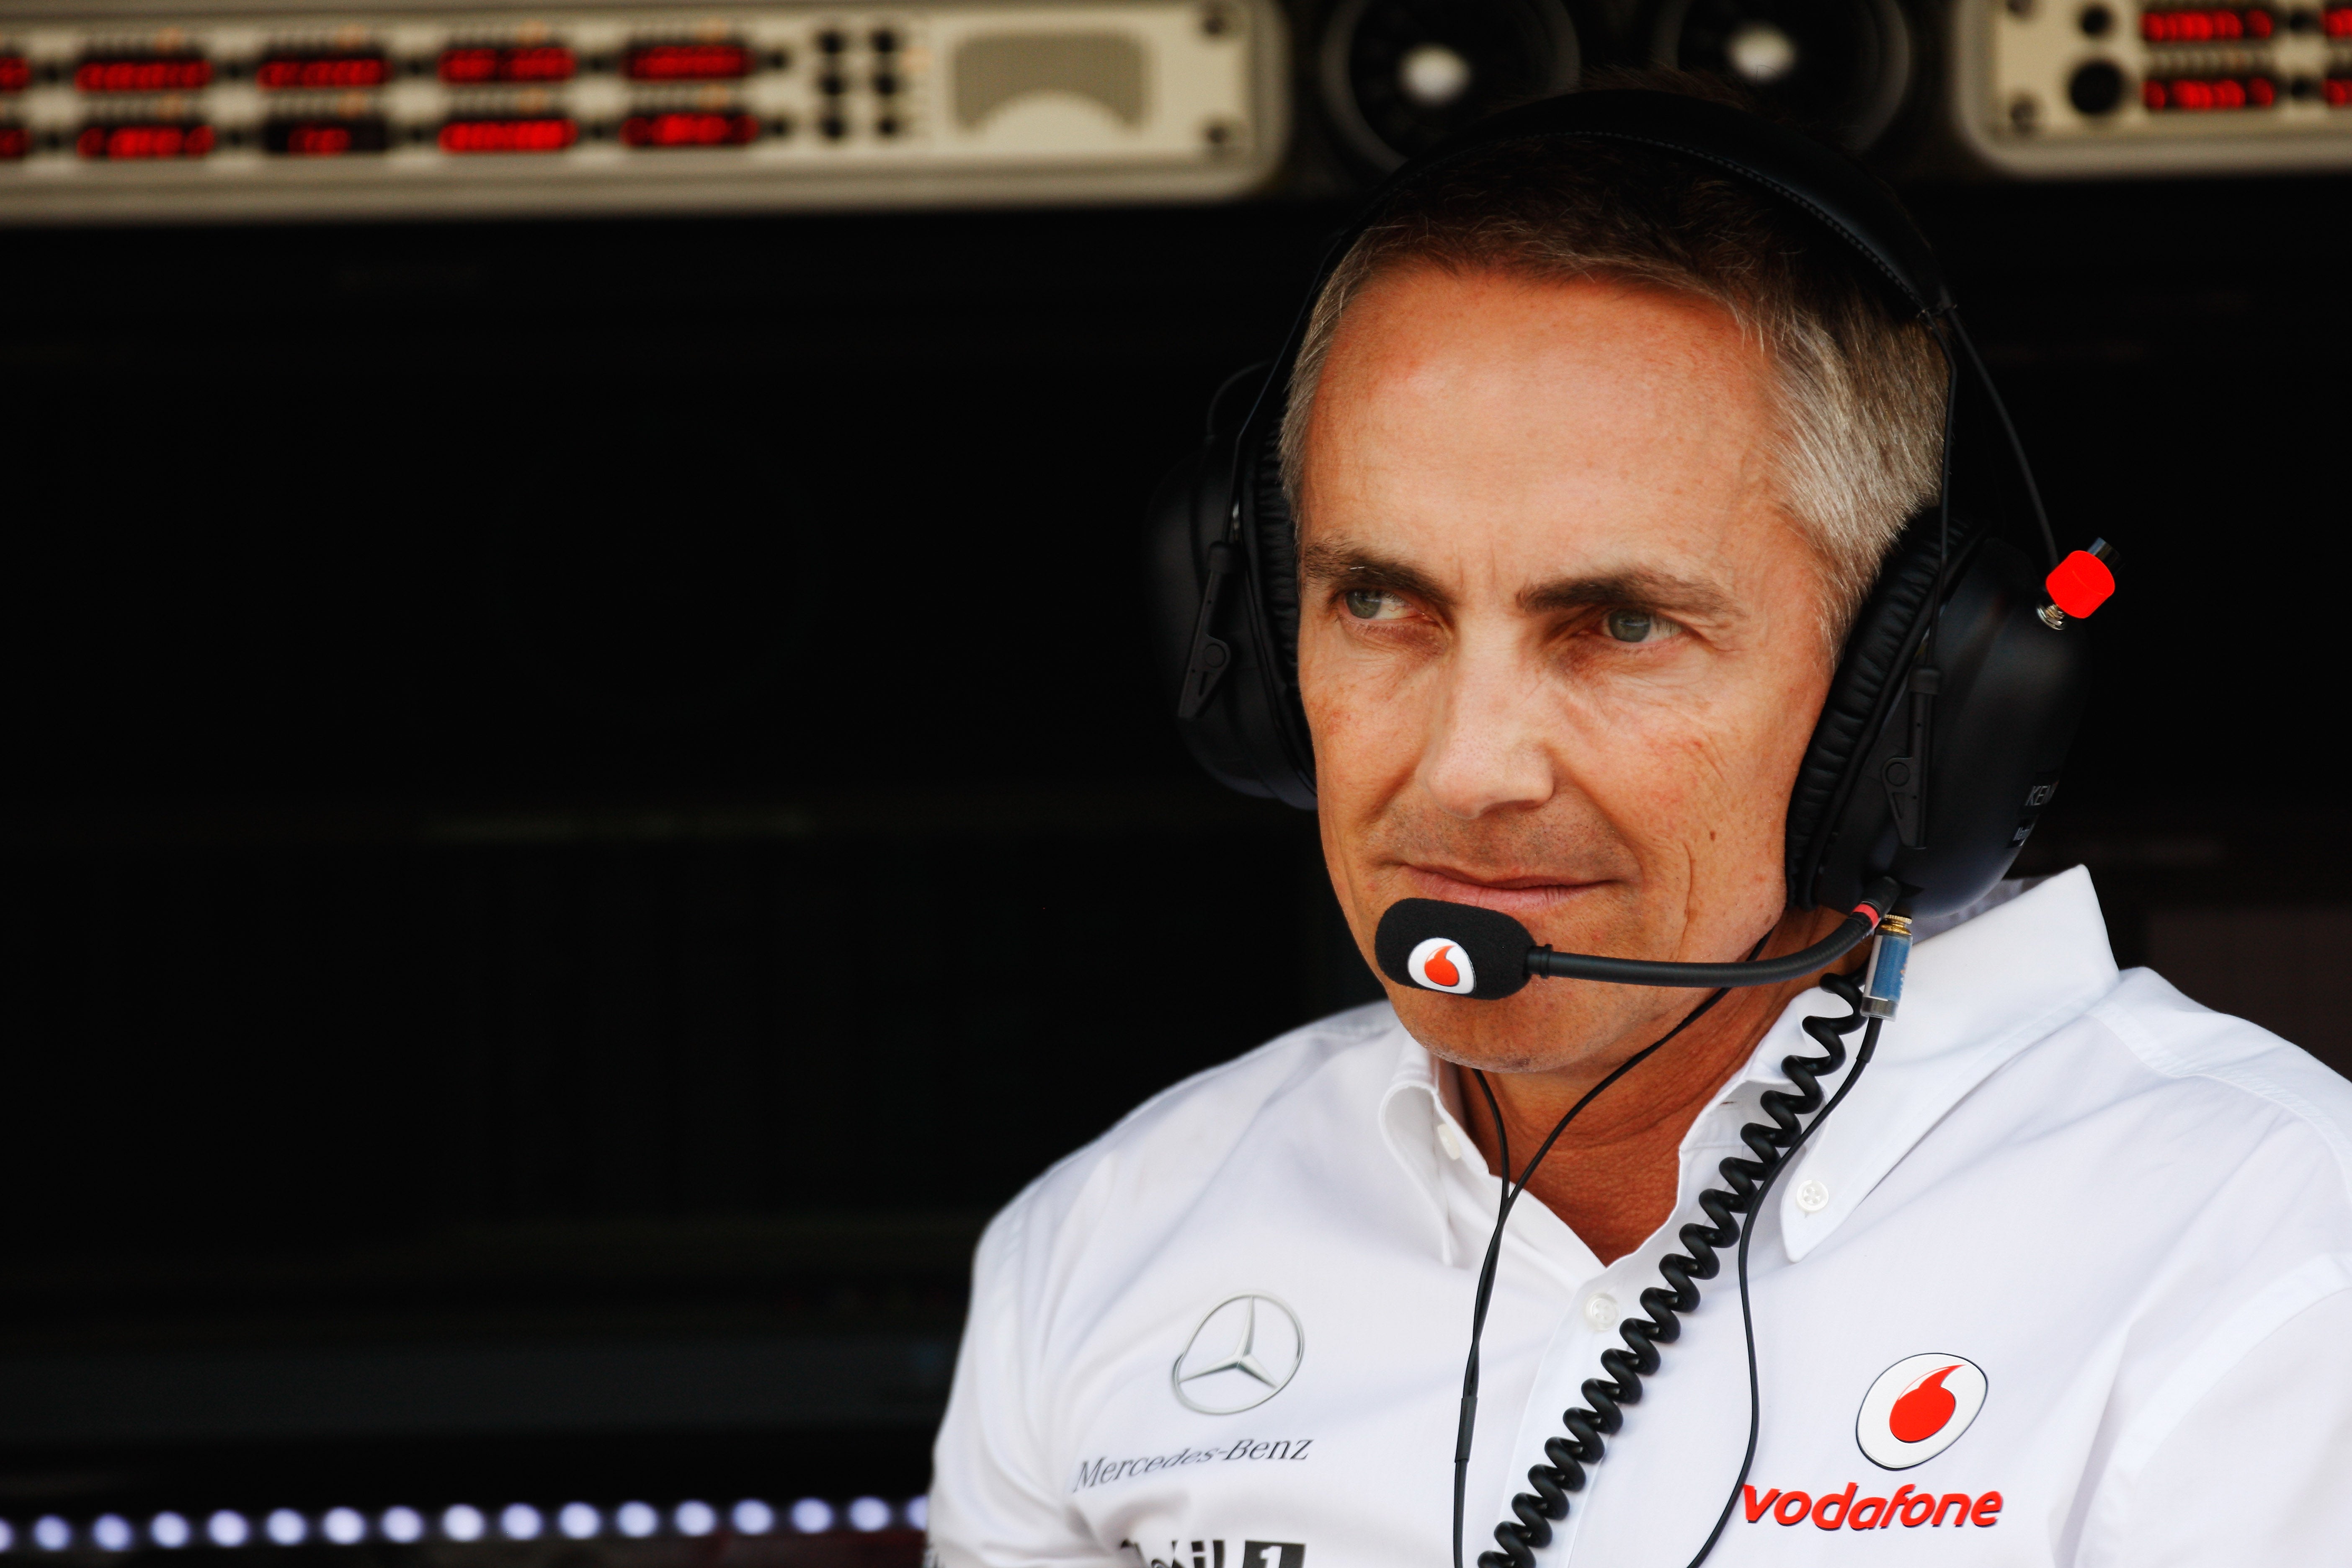 Martin Whitmarsh was team principle at McLaren for six years